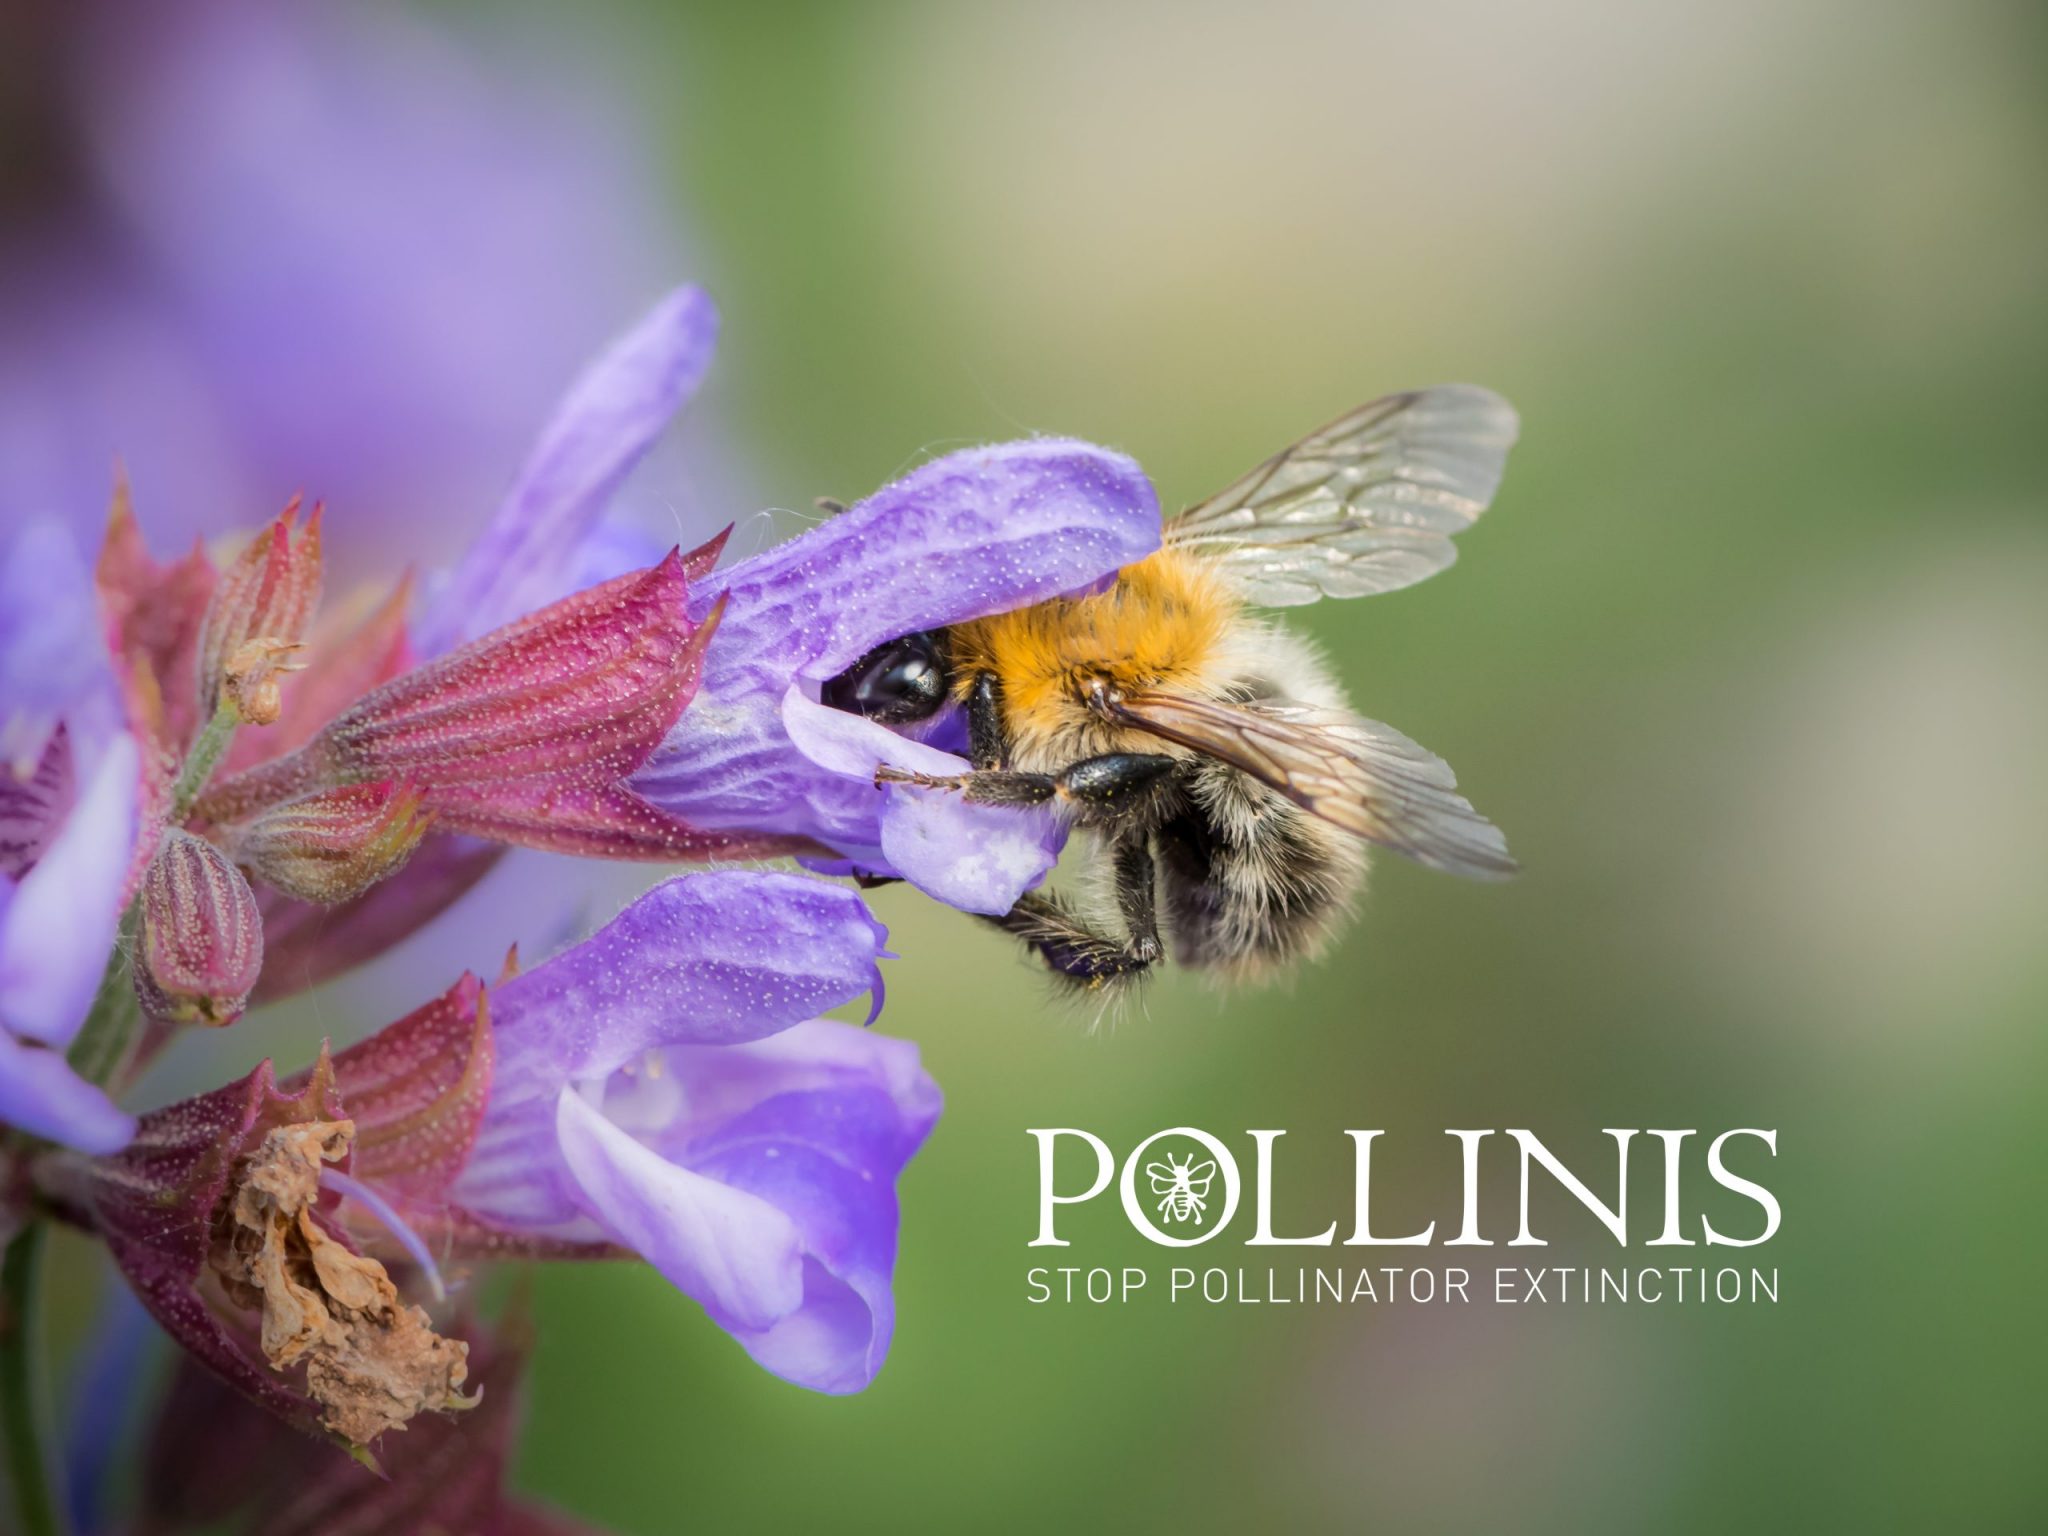 Les pollinisateurs - Pollinis